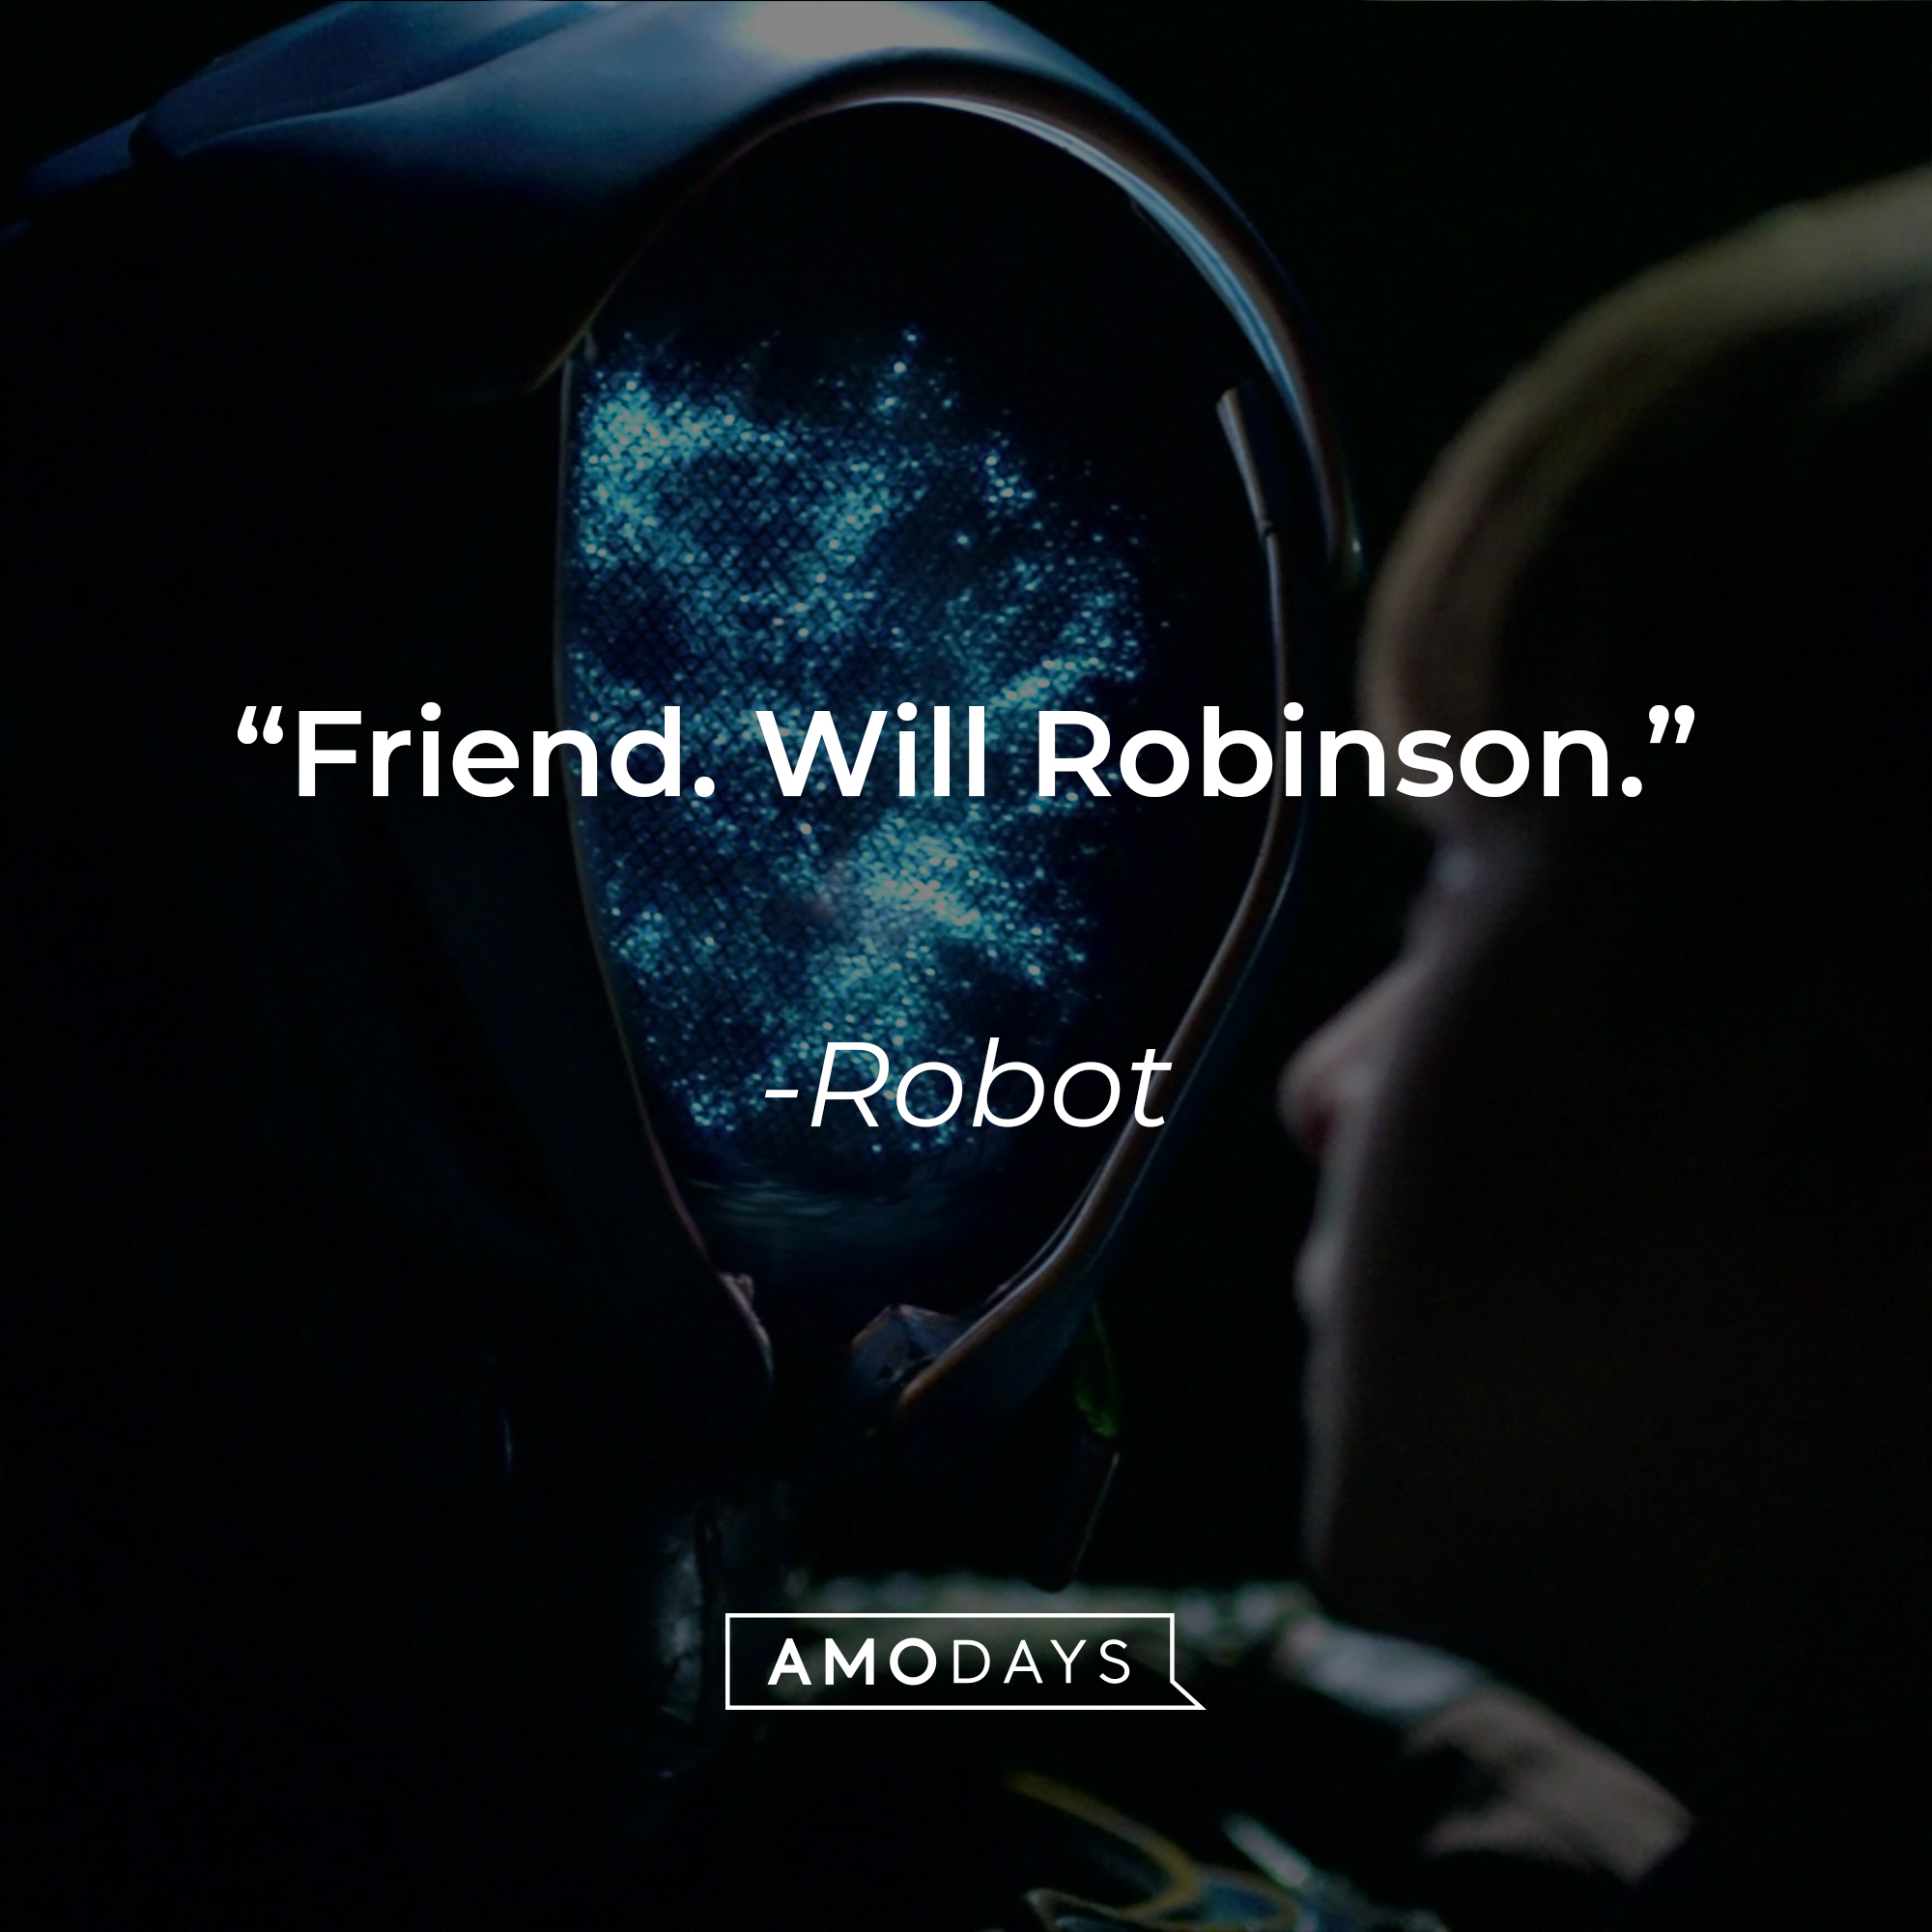 Robot’s quote:  "Friend. Will Robinson." | Image: Facebook.com/lostinspacenetflix